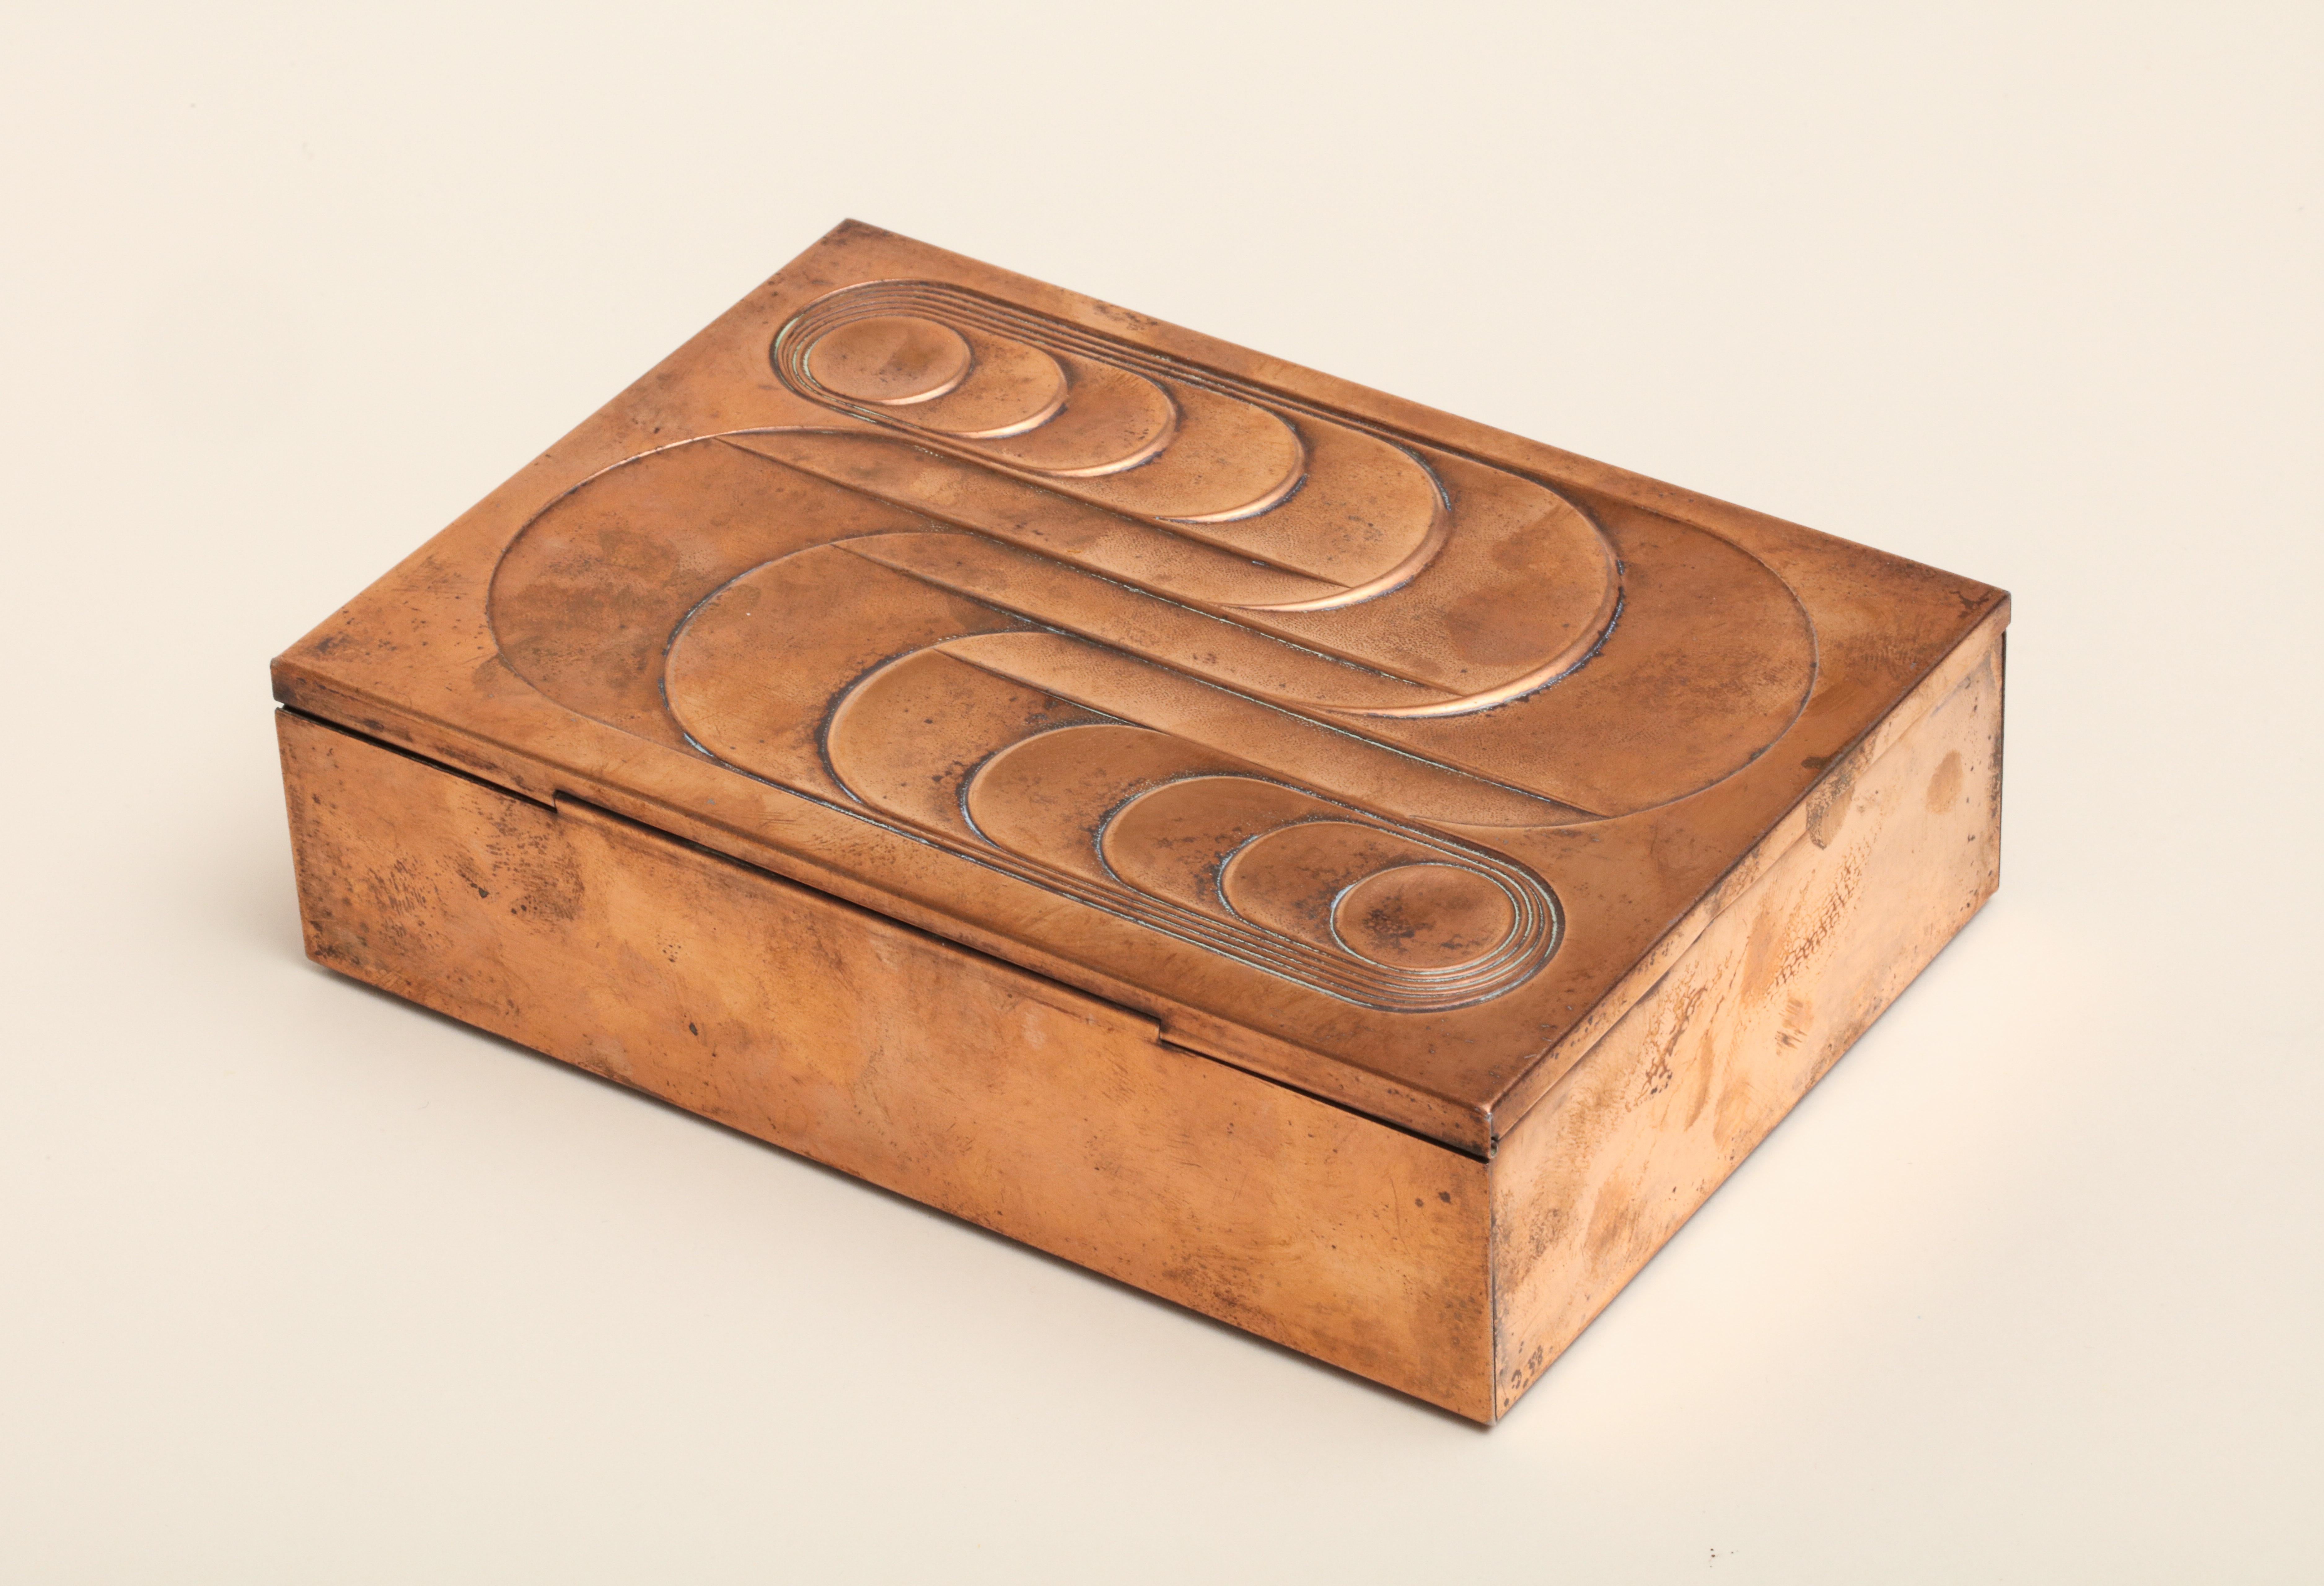 20th Century American Art Deco Hinged Copper Box with Geometric Design